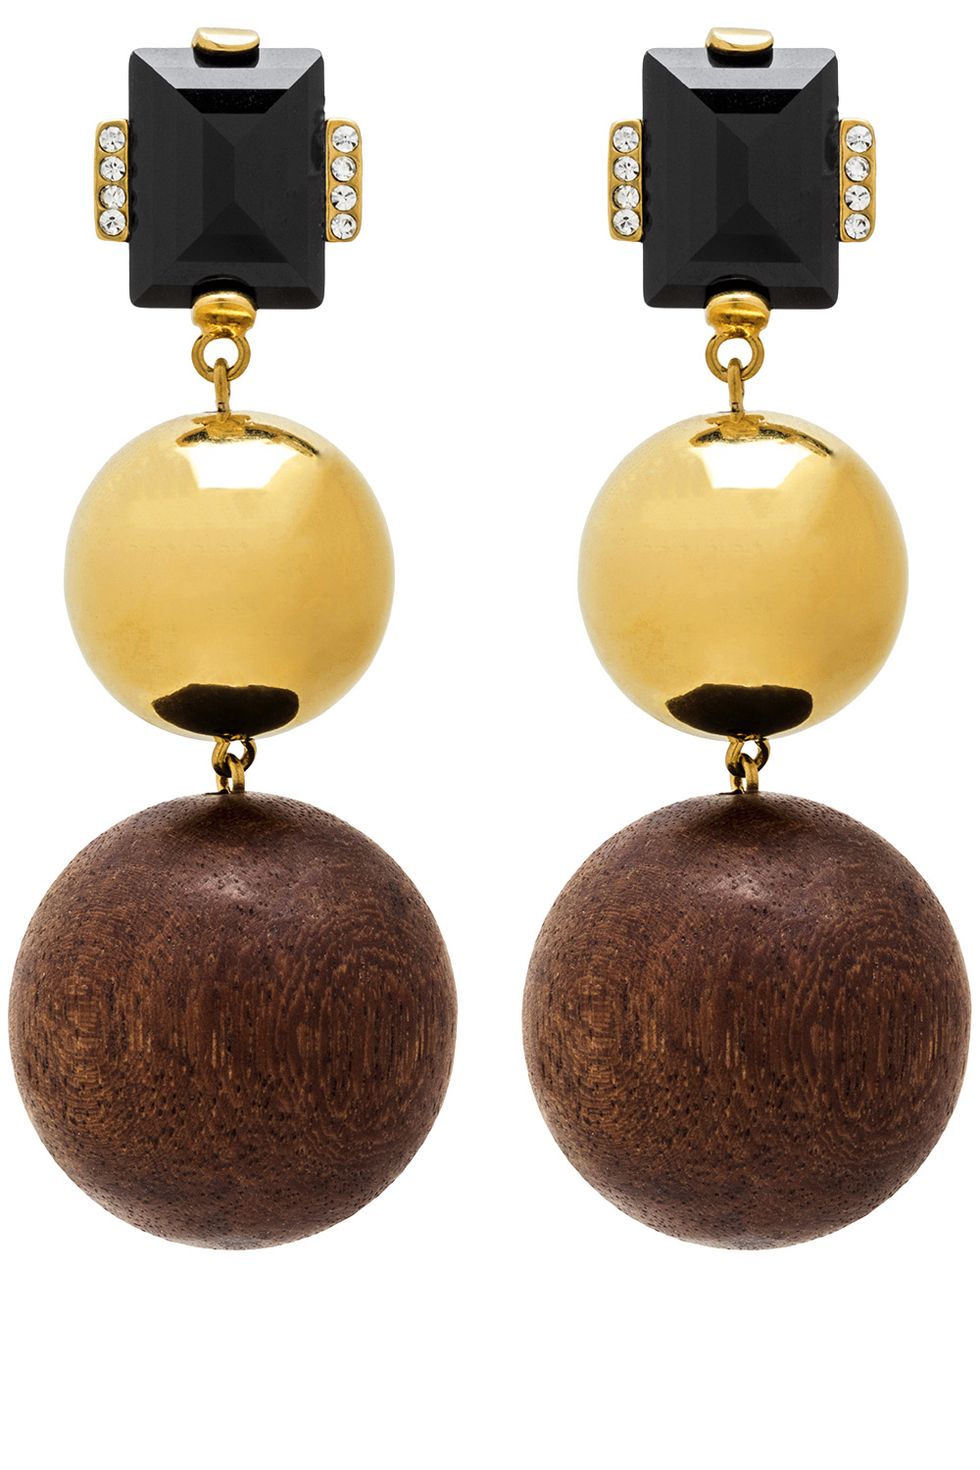 <p>Marni earrings, $450, <a href="http://marni.com" target="_blank">marni.com</a>.</p>